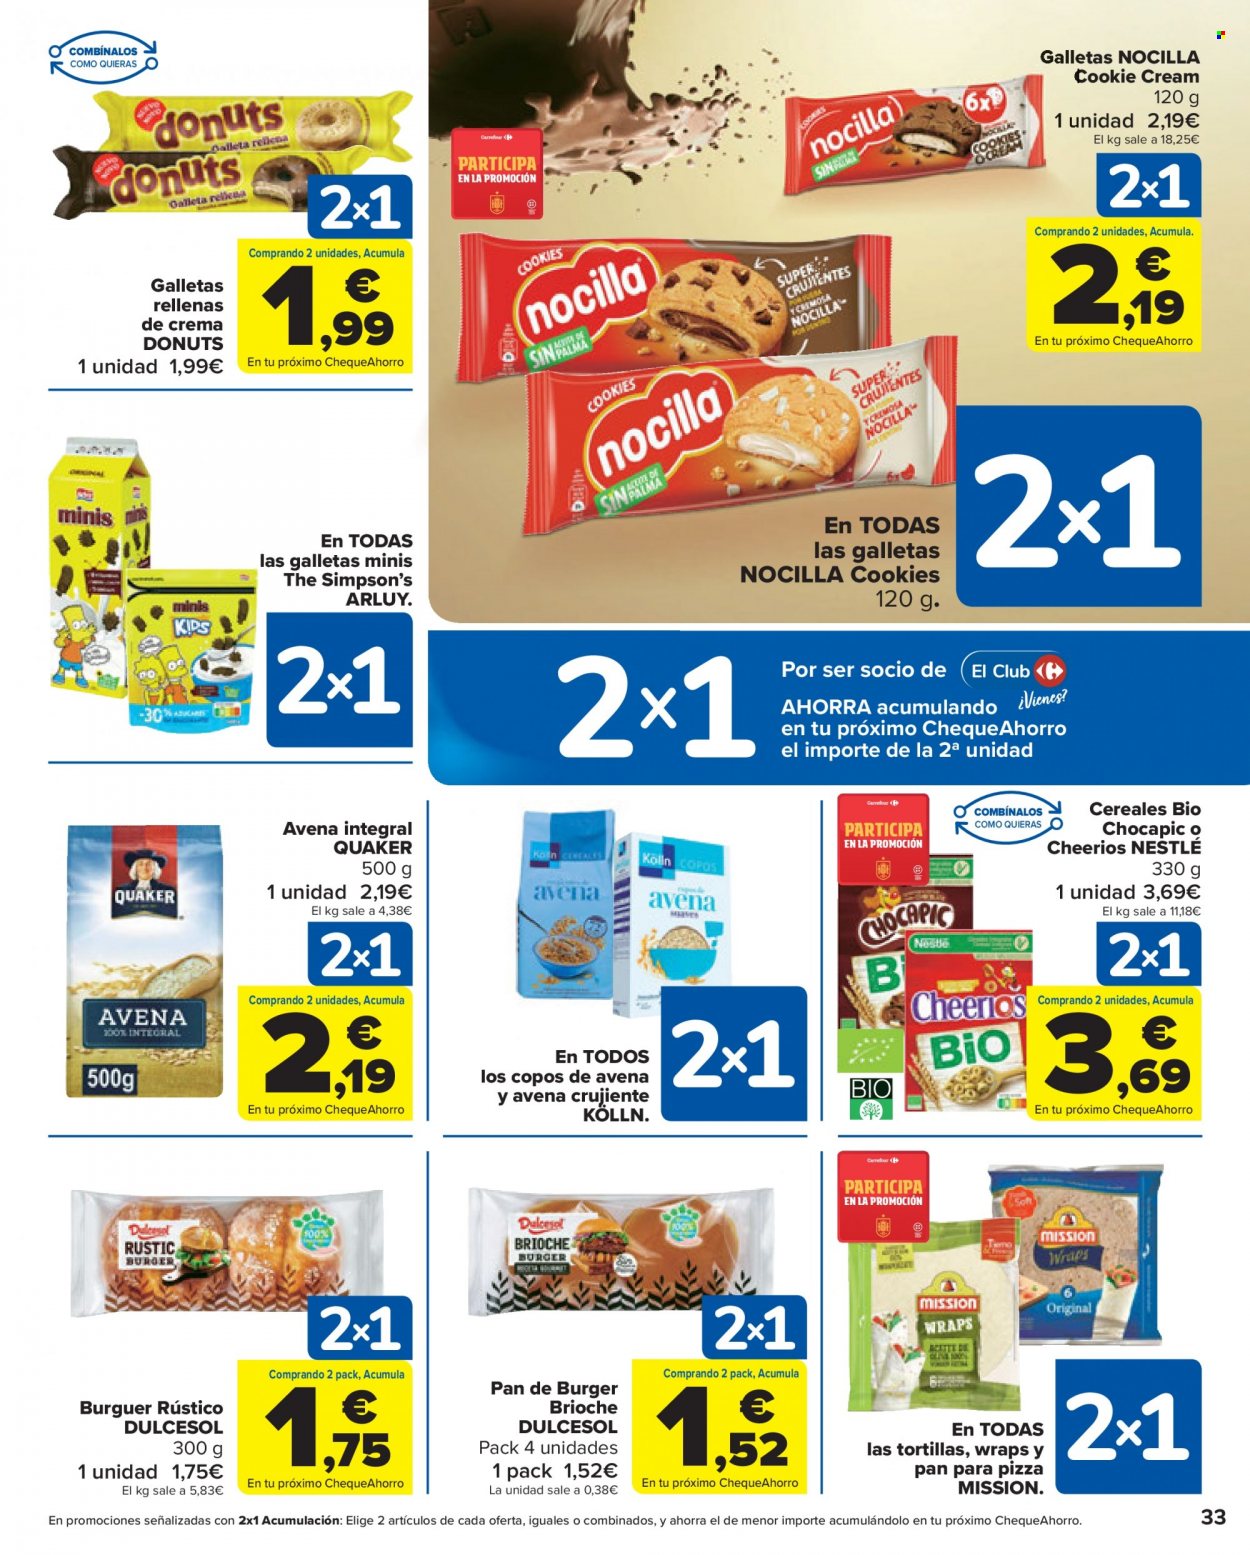 thumbnail - Folleto actual Carrefour - 02/12/22 - 14/12/22 - Ventas - galletas, cereales, Chocapic, Nestlé, Dulcesol, pan hamburguesa, pan, Nocilla, copos de avena. Página 33.